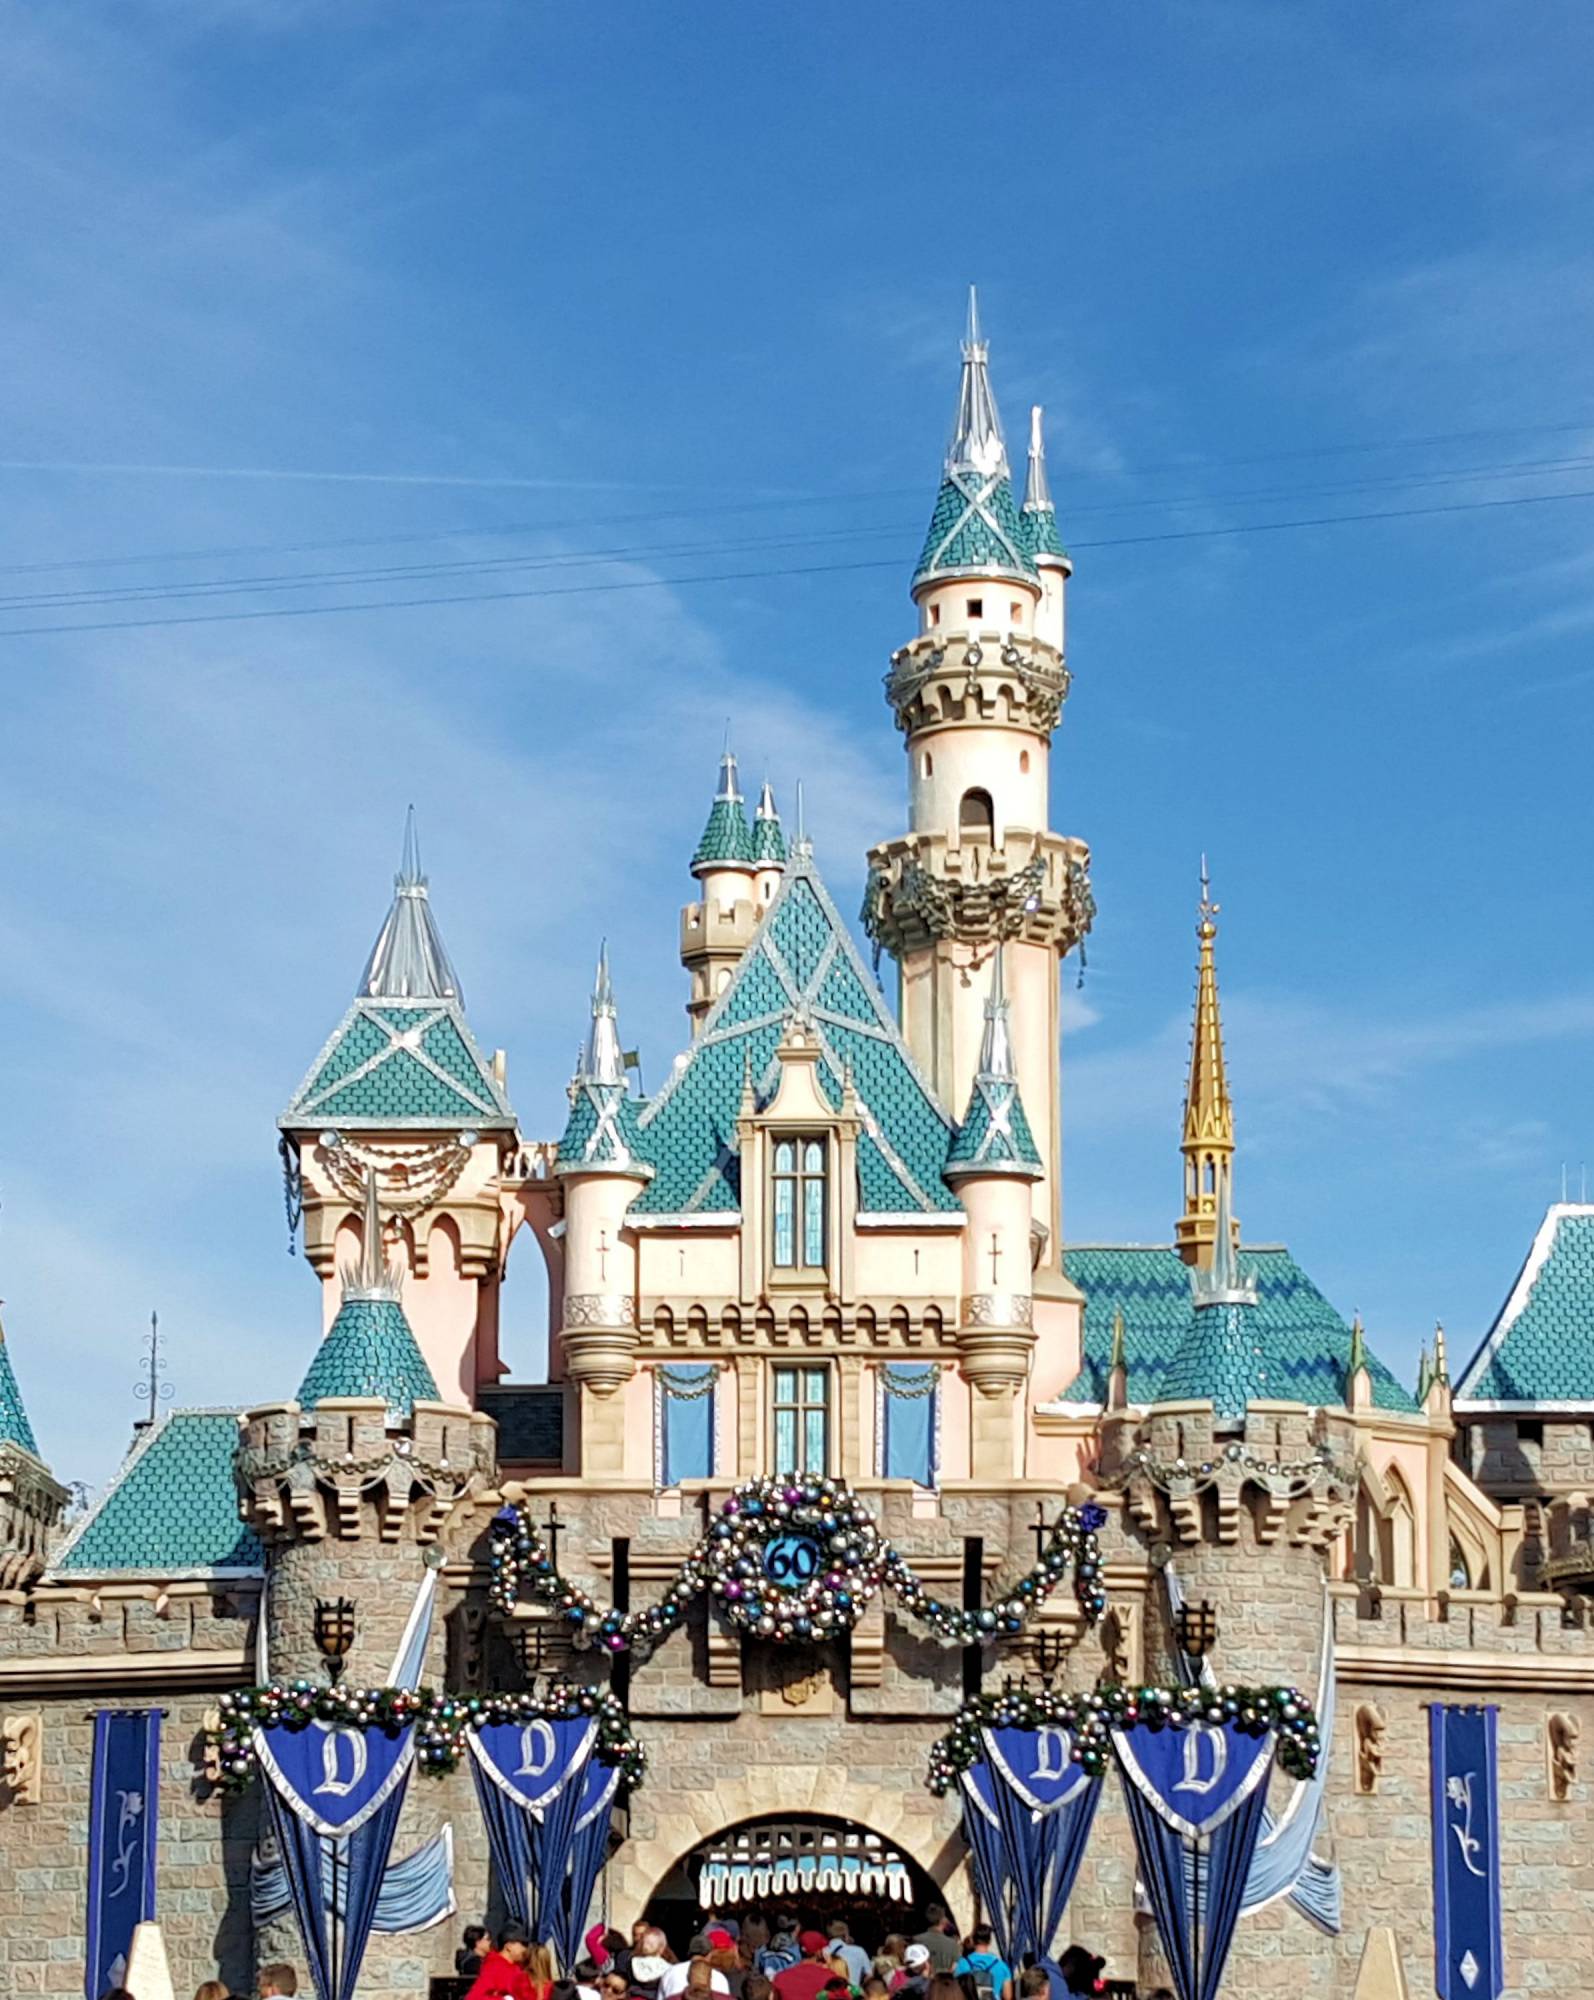 Sleeping Beauty Castle - Diamond Celebration at Disneyland